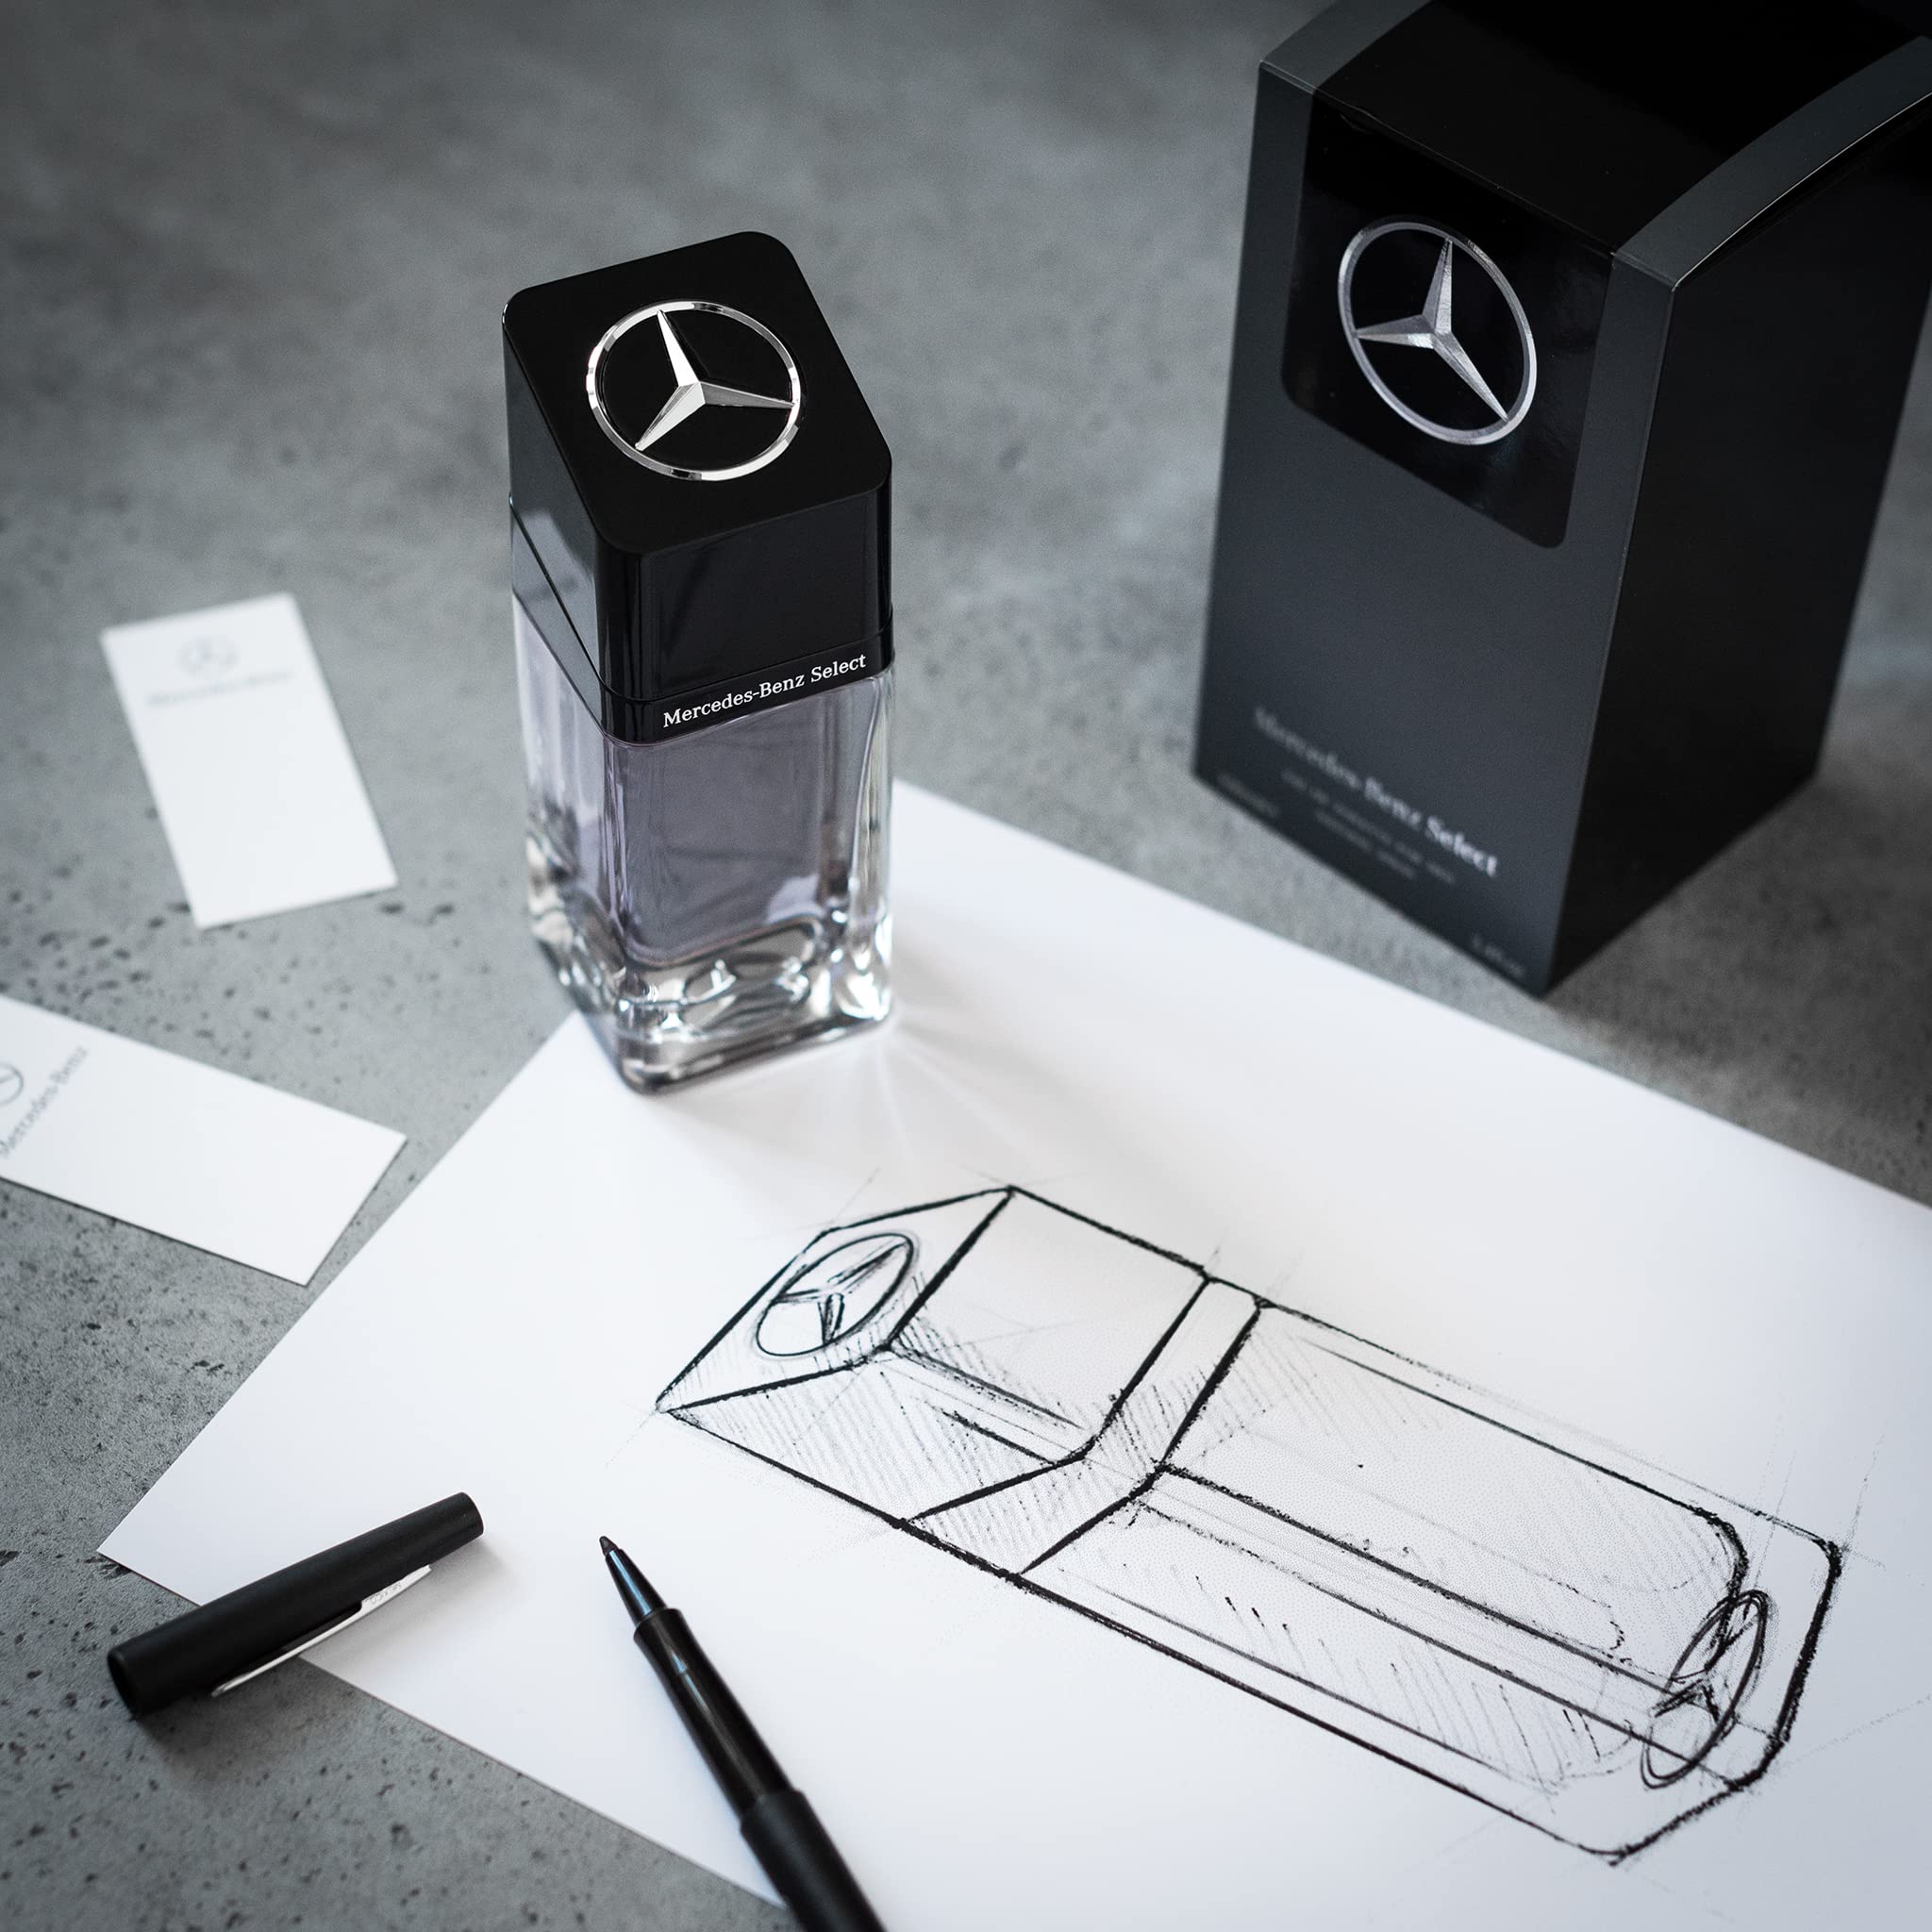 Mercedes Benz Select - Elegant Fragrance With Fresh, Sensual Floral Notes - Mesmerize The Senses With Original Luxury Men’s Eau De Toilette Spray - Endless Day Through Night Scent Payoff - 3.4 OZ